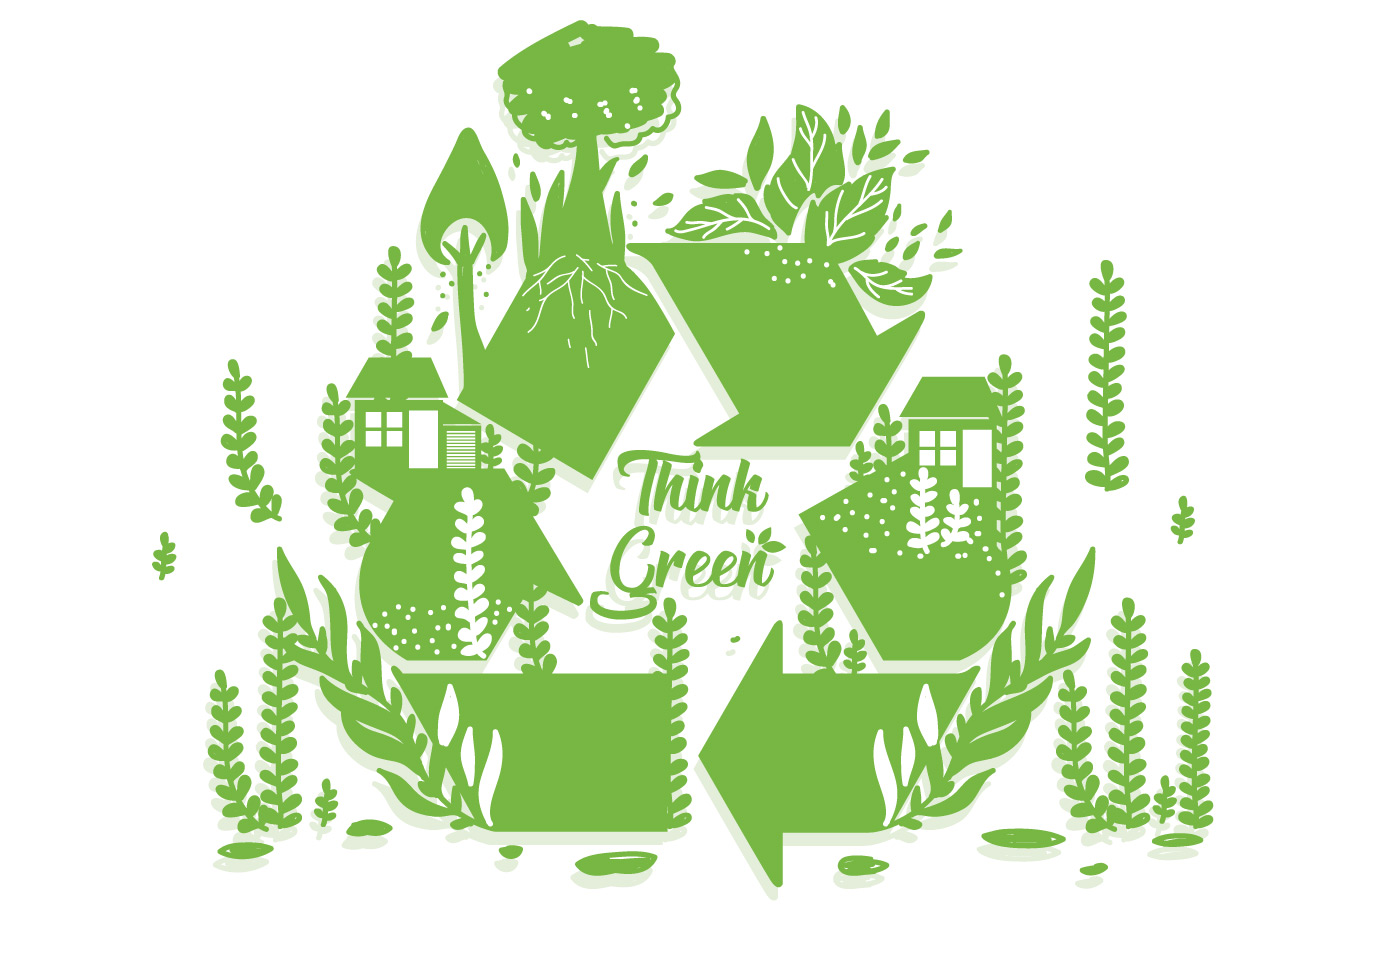 Sustainability, environment, thinking green!